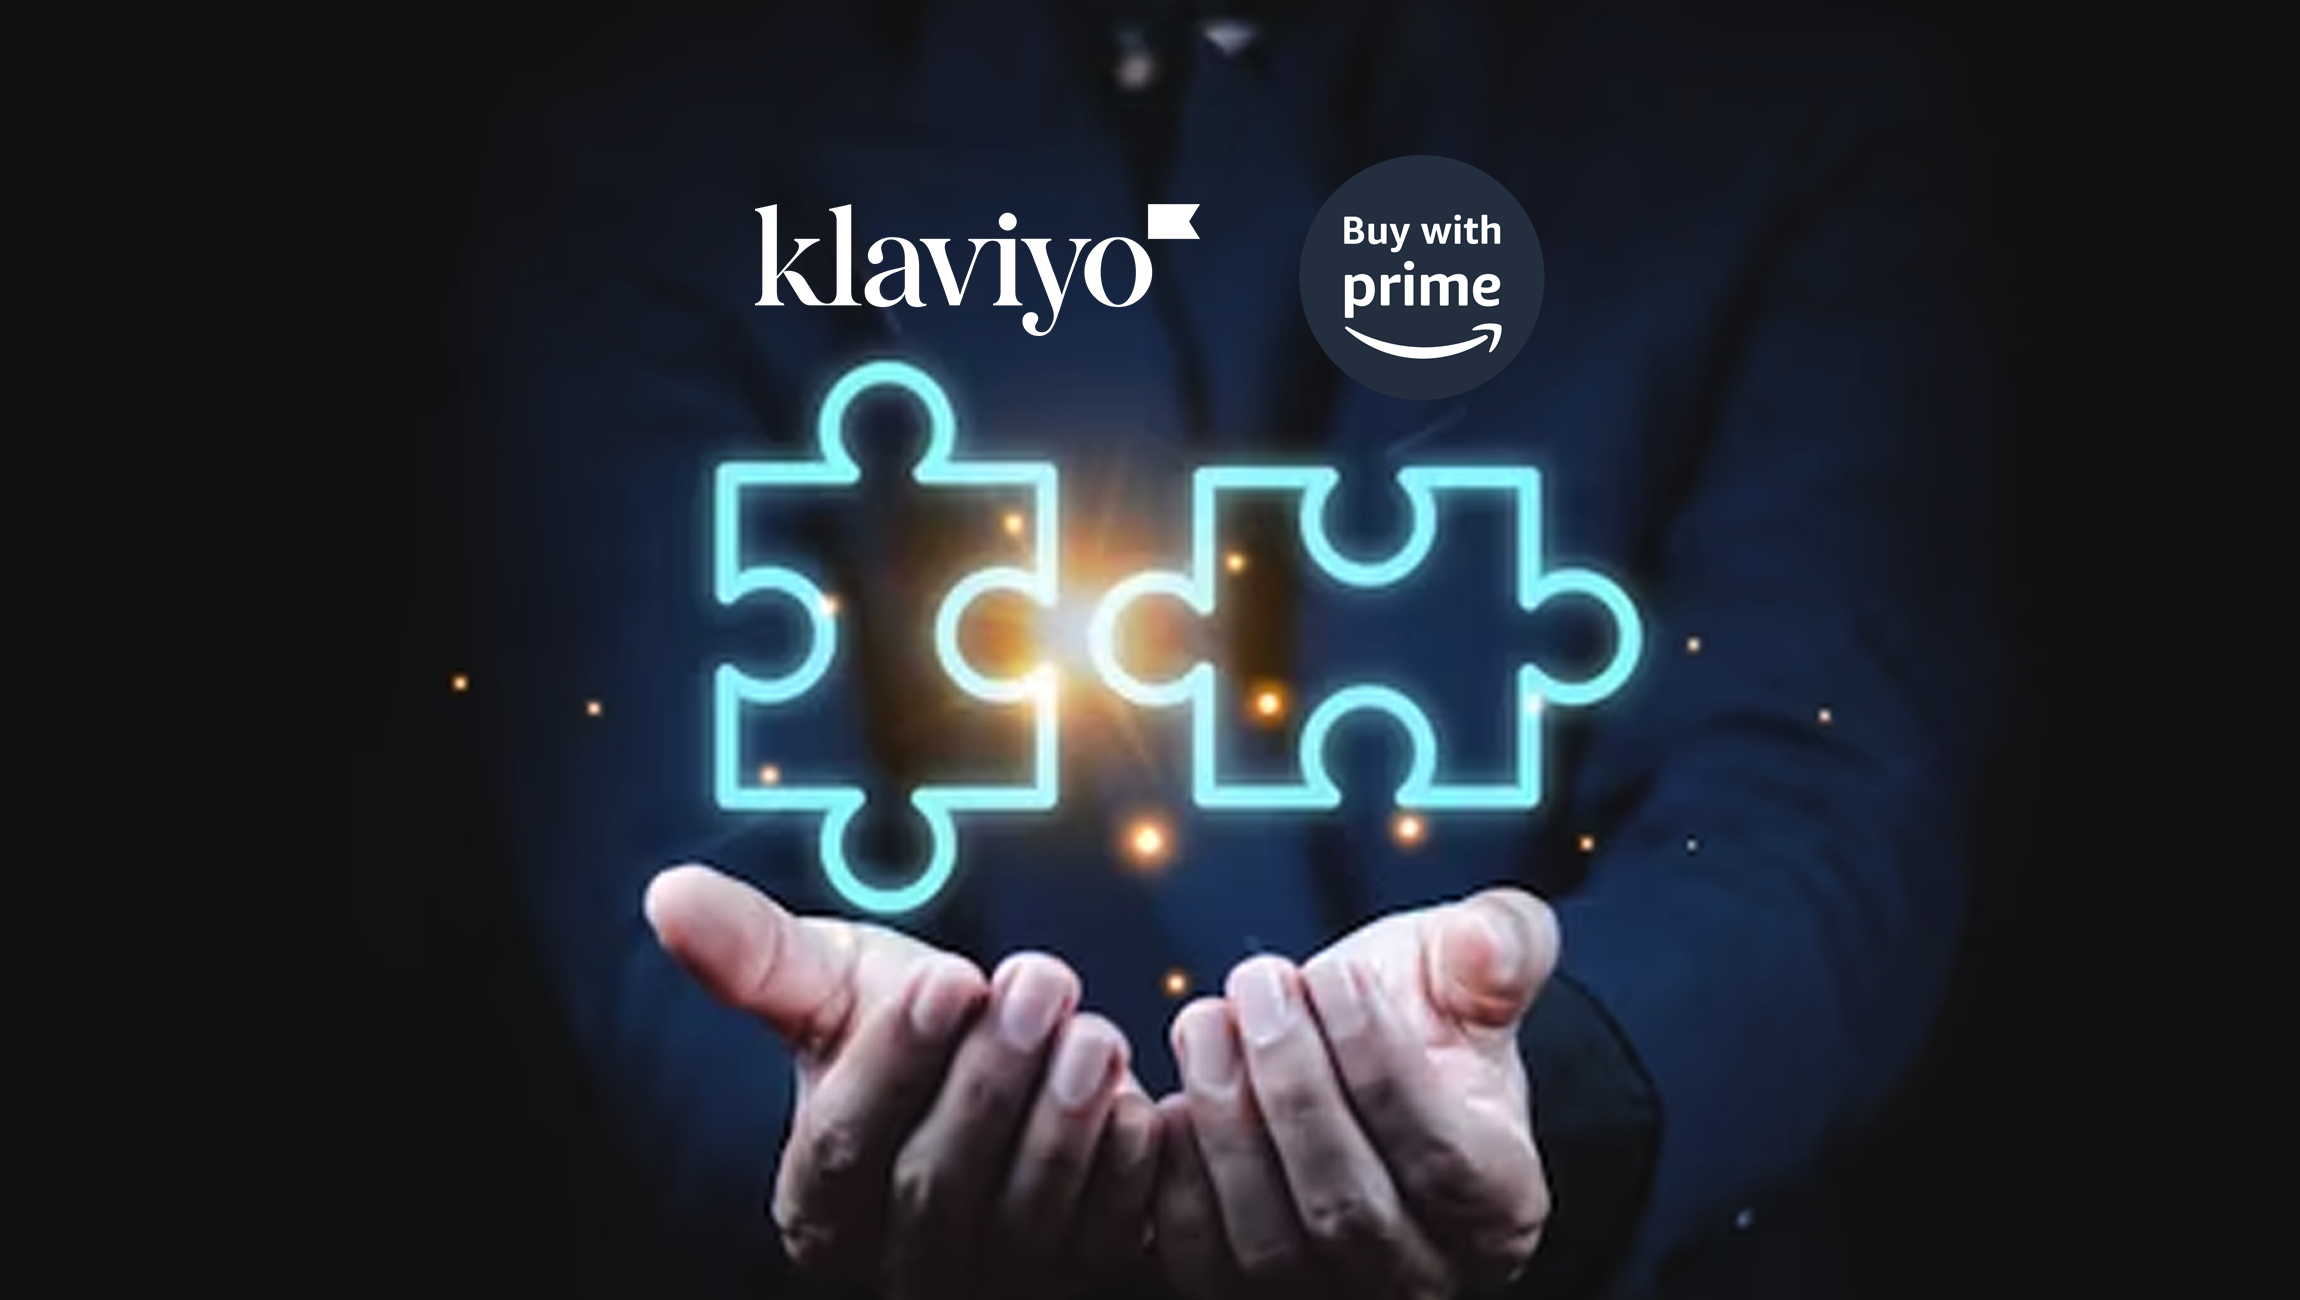 Klaviyo Announces Integration With Amazon’s Buy With Prime